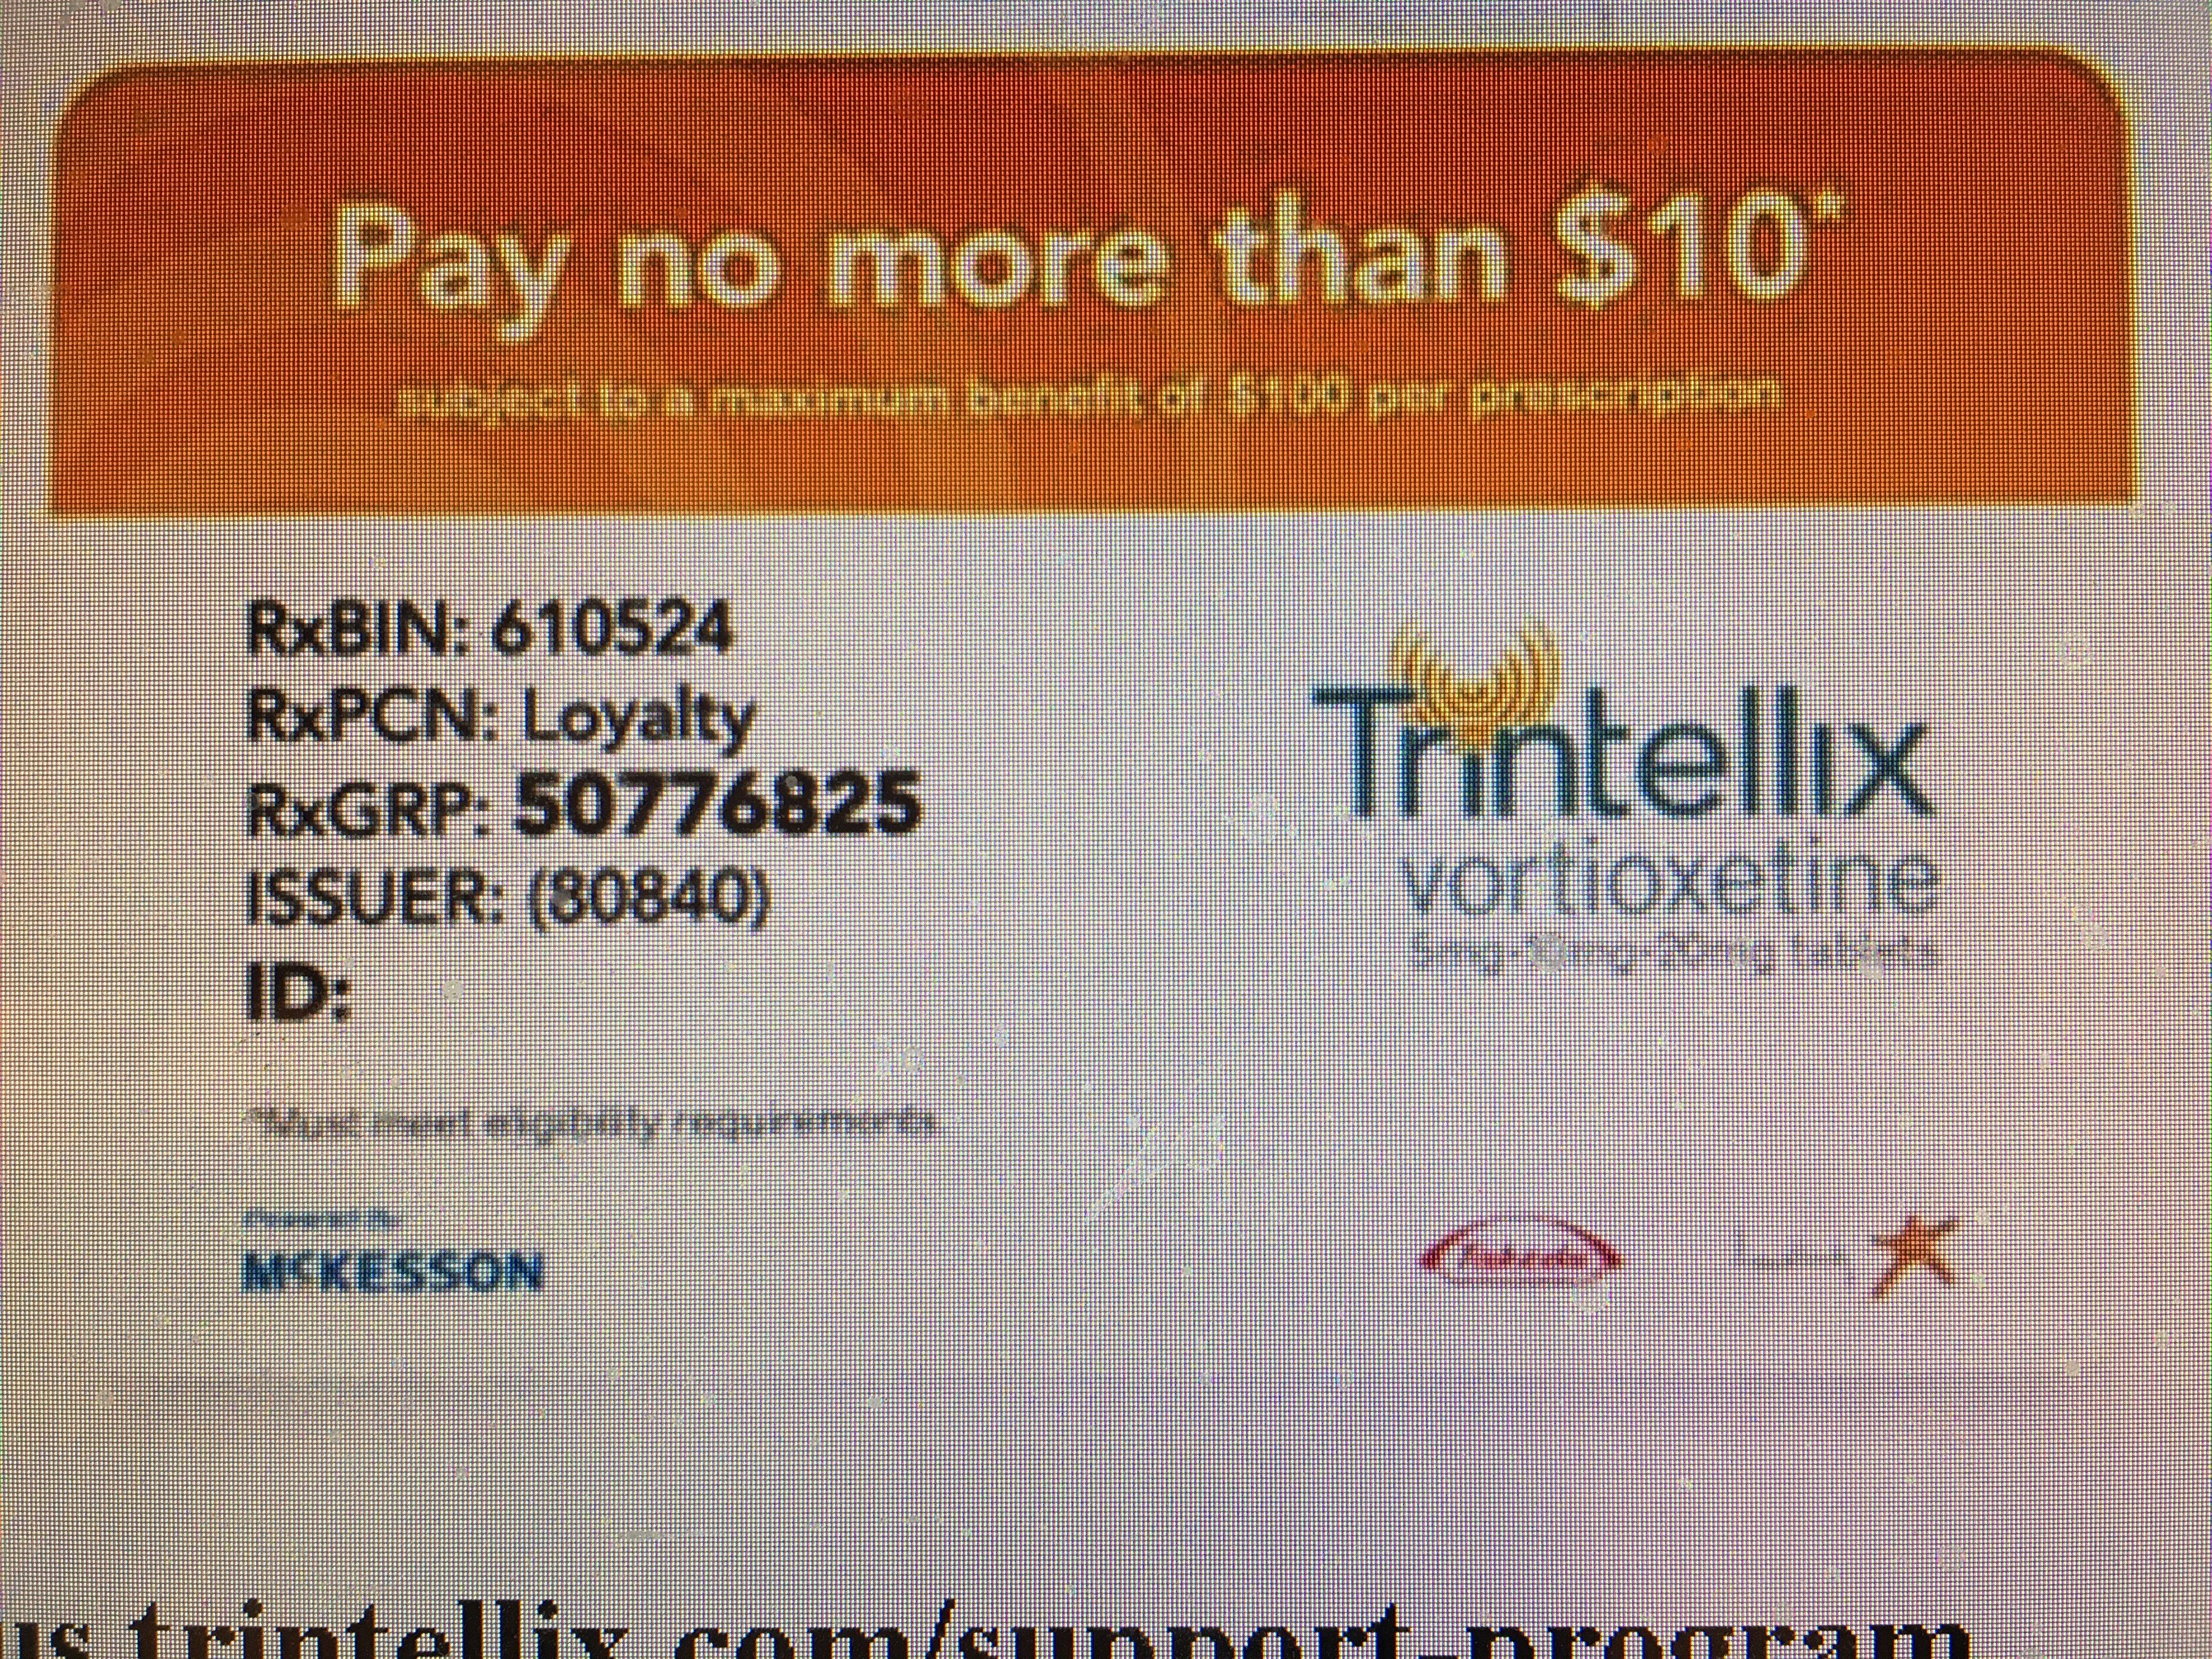 Trintellix - Pay No More Than $… | Drug Savings - Coupons And - Free Printable Spiriva Coupons